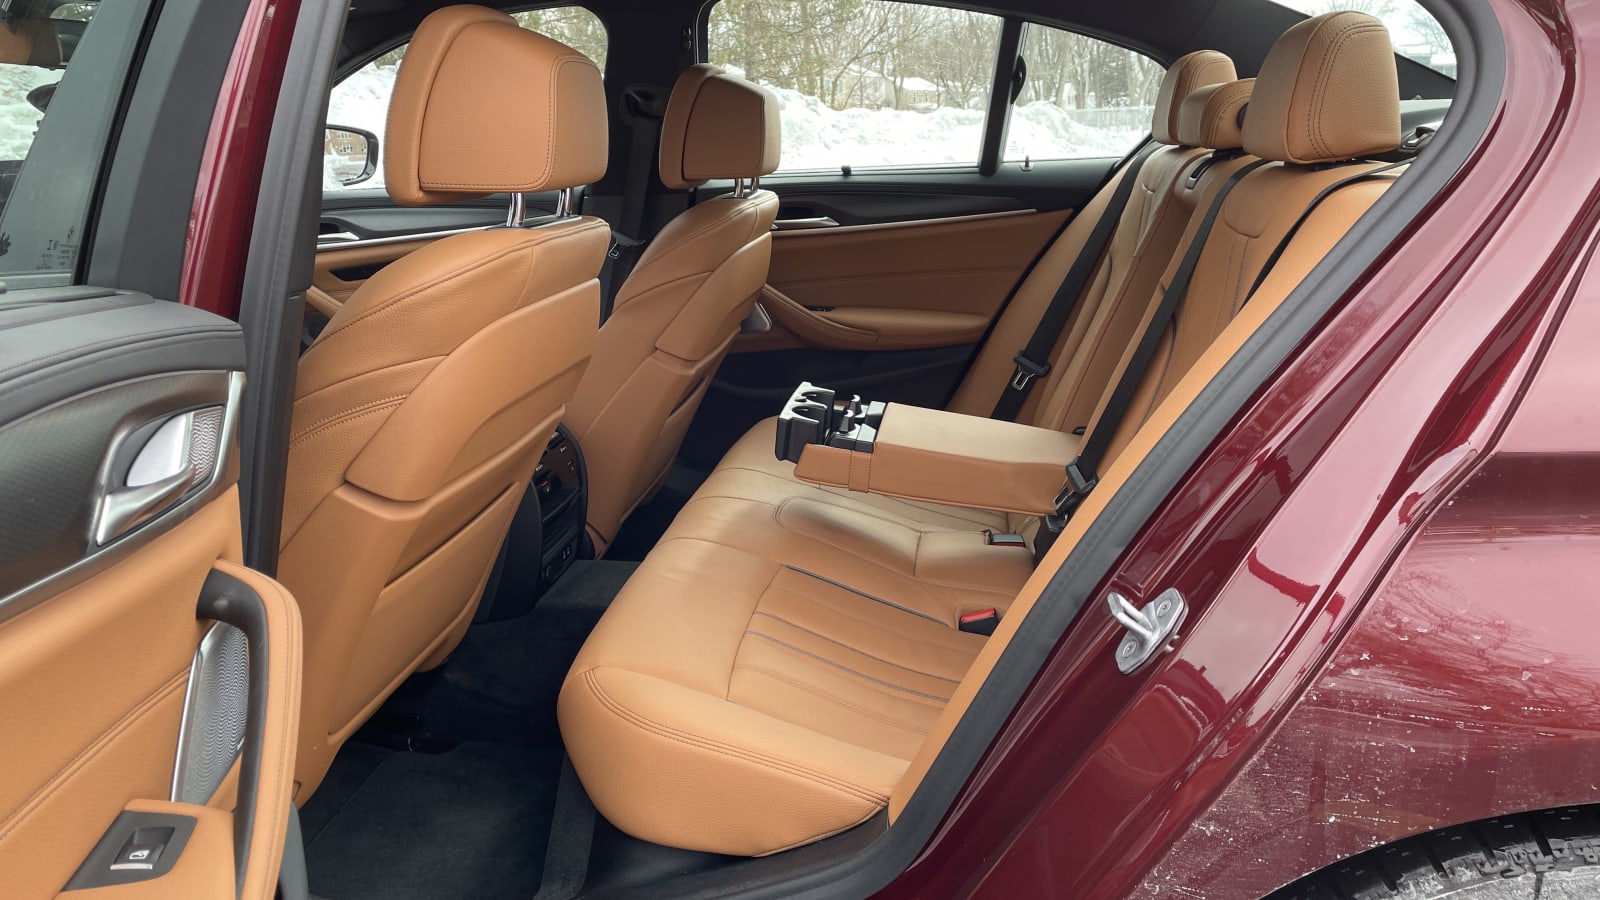 BMW 528i interior - Seats